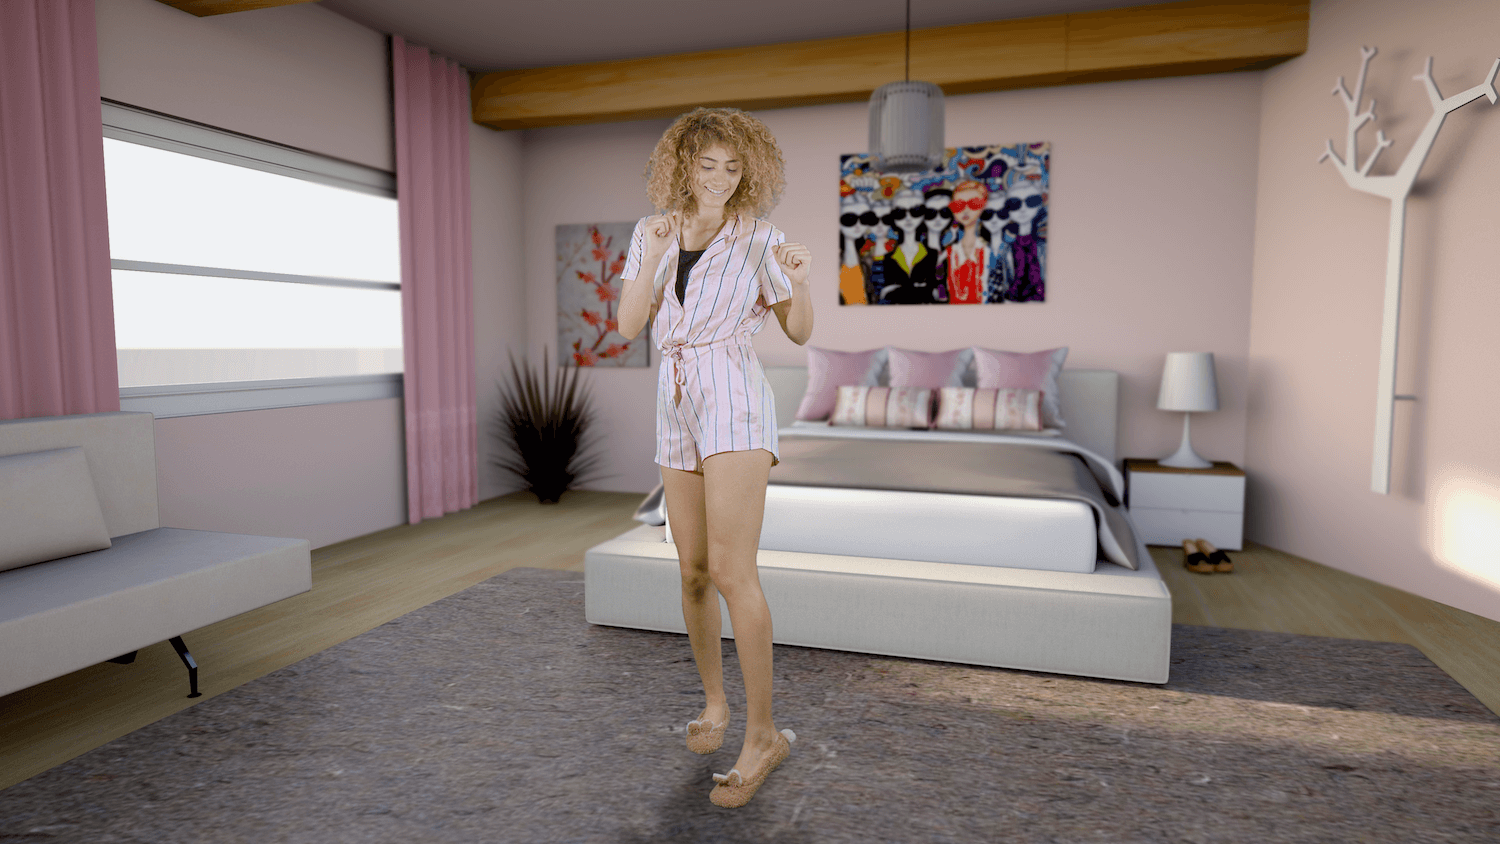 A young woman dancing in her bedroom